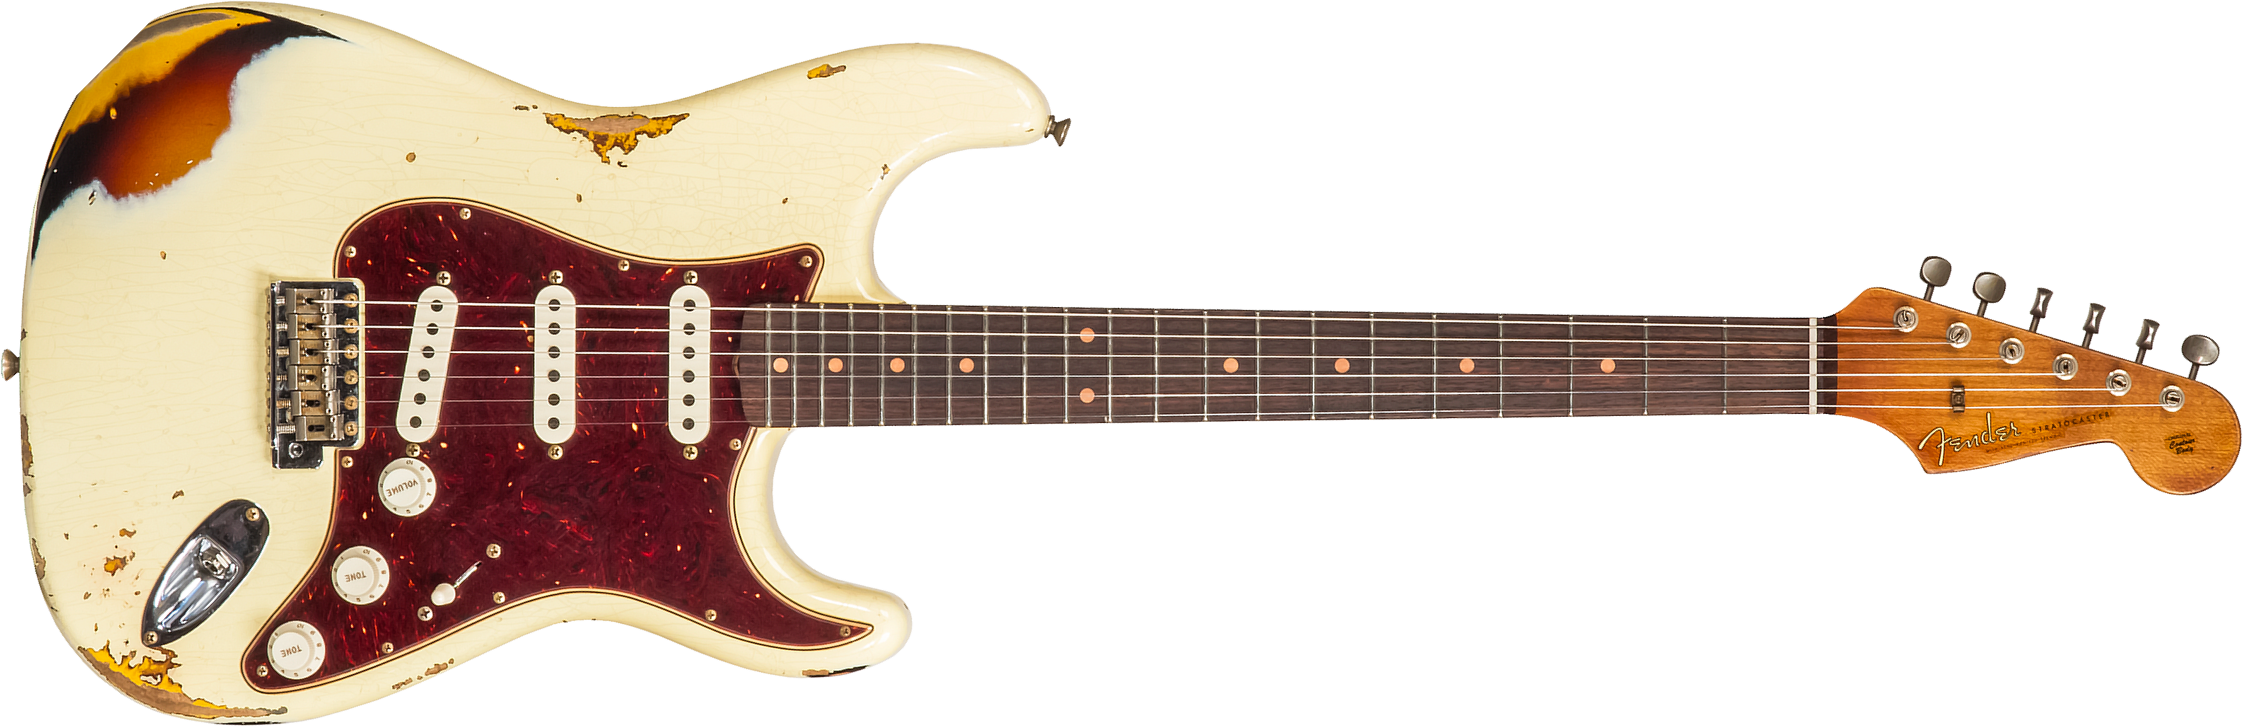 Fender Custom Shop Strat 1961 3s Trem Rw #cz563376 - Heavy Relic Vintage White/3-color Sunburst - Elektrische gitaar in Str-vorm - Main picture